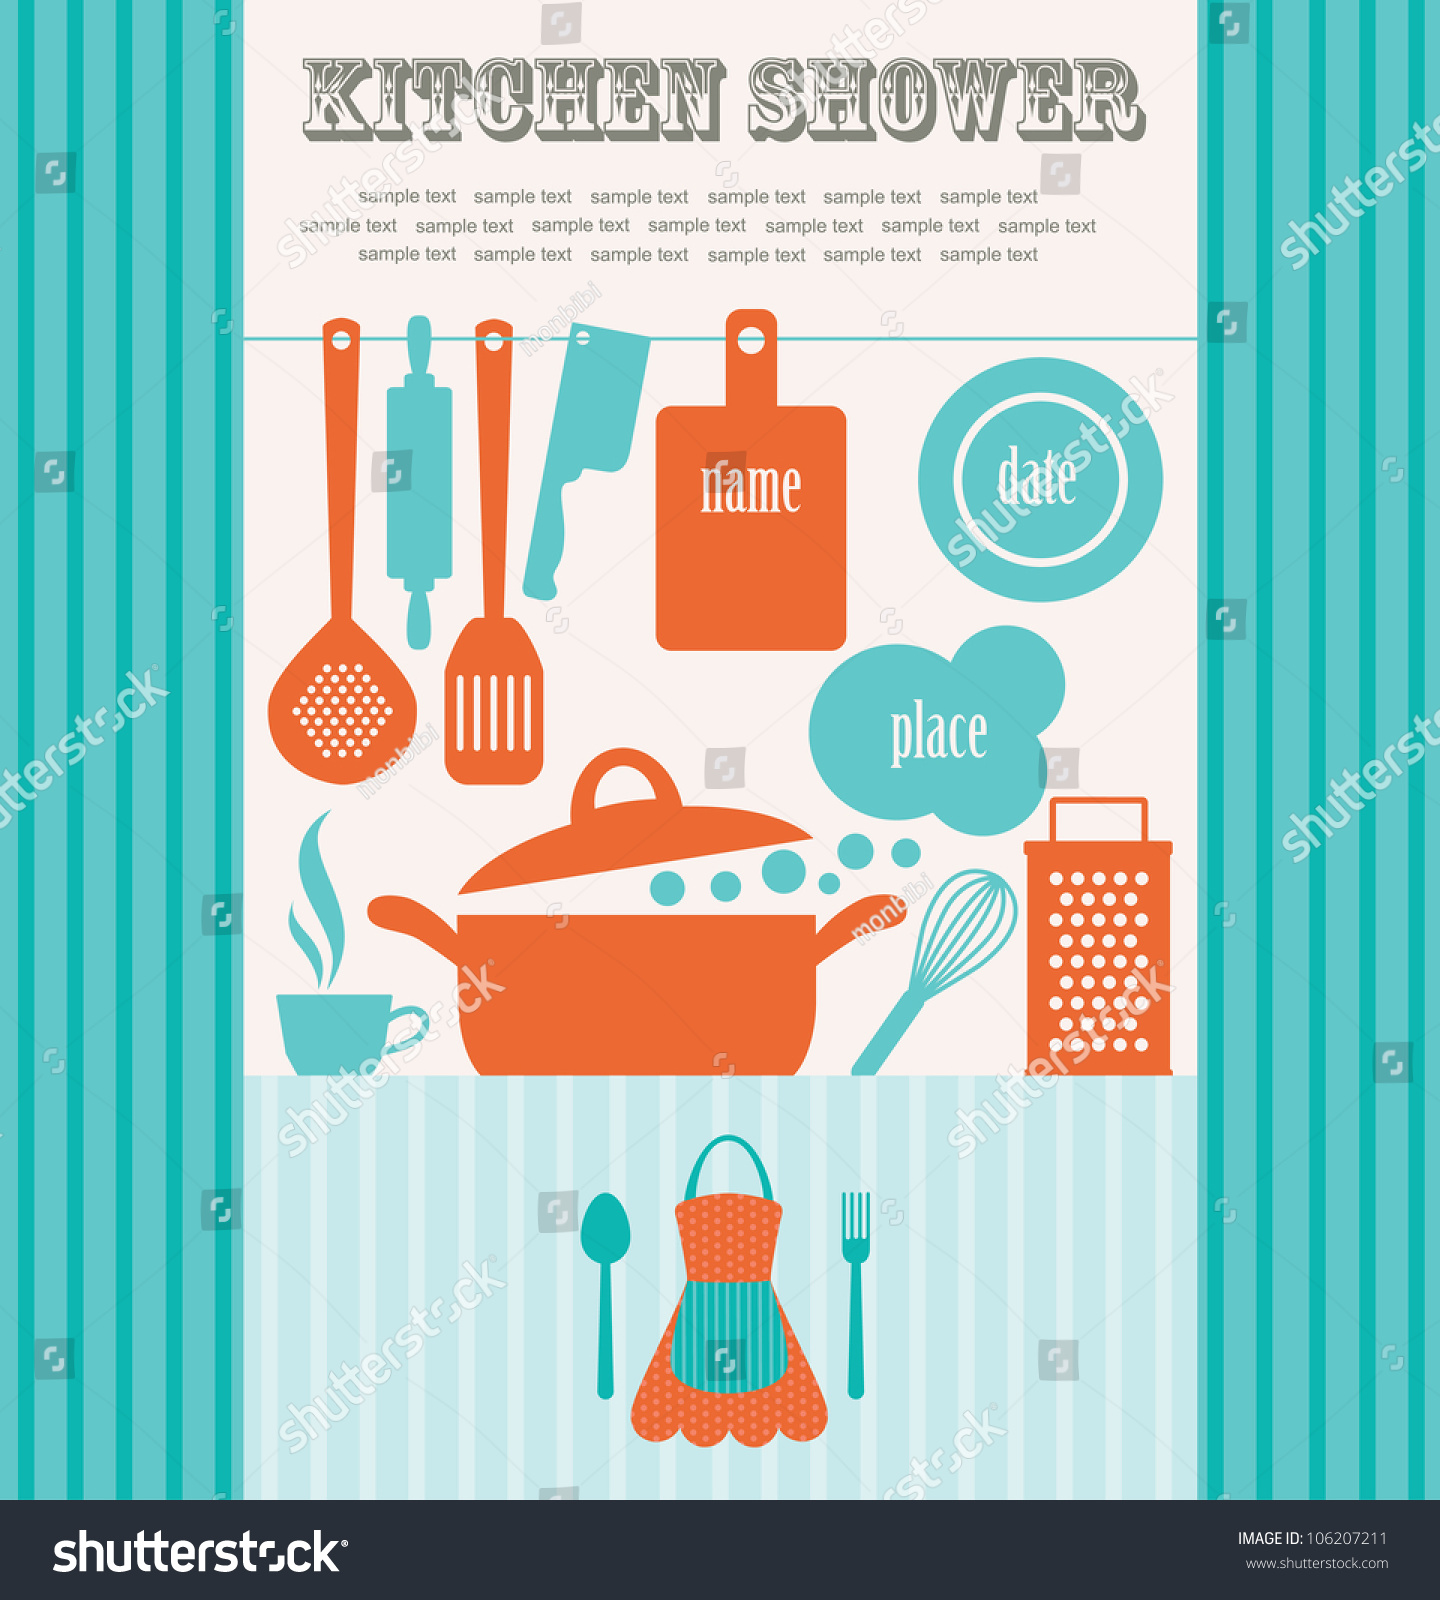 Kitchen Shower. Vector Illustration - 106207211 : Shutterstock